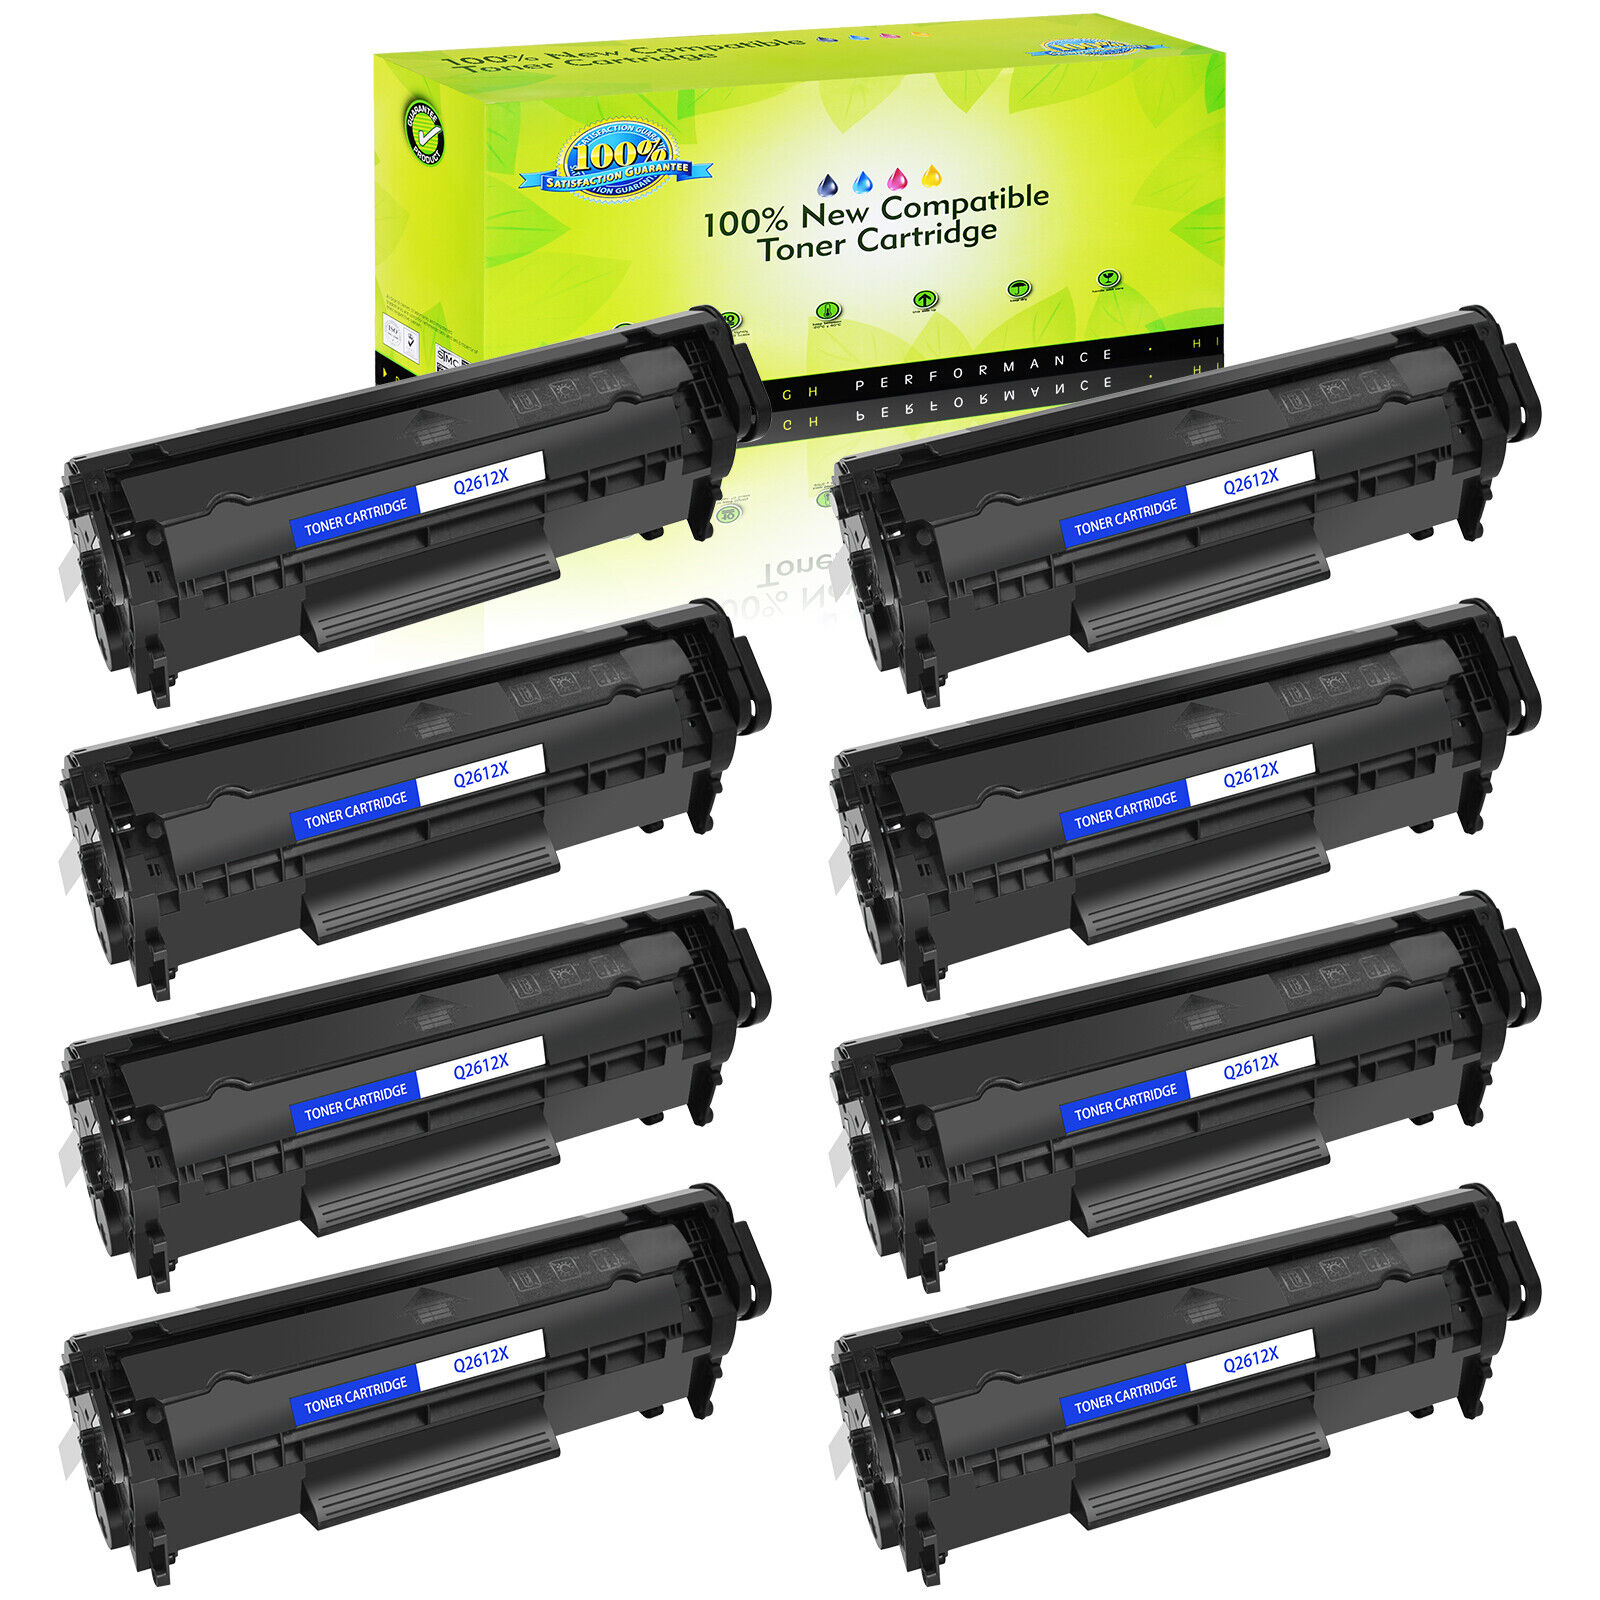 8PK Black Q2612X Toner Cartridge for HP 1022 1020 1012 1018 3055 n nw Printer